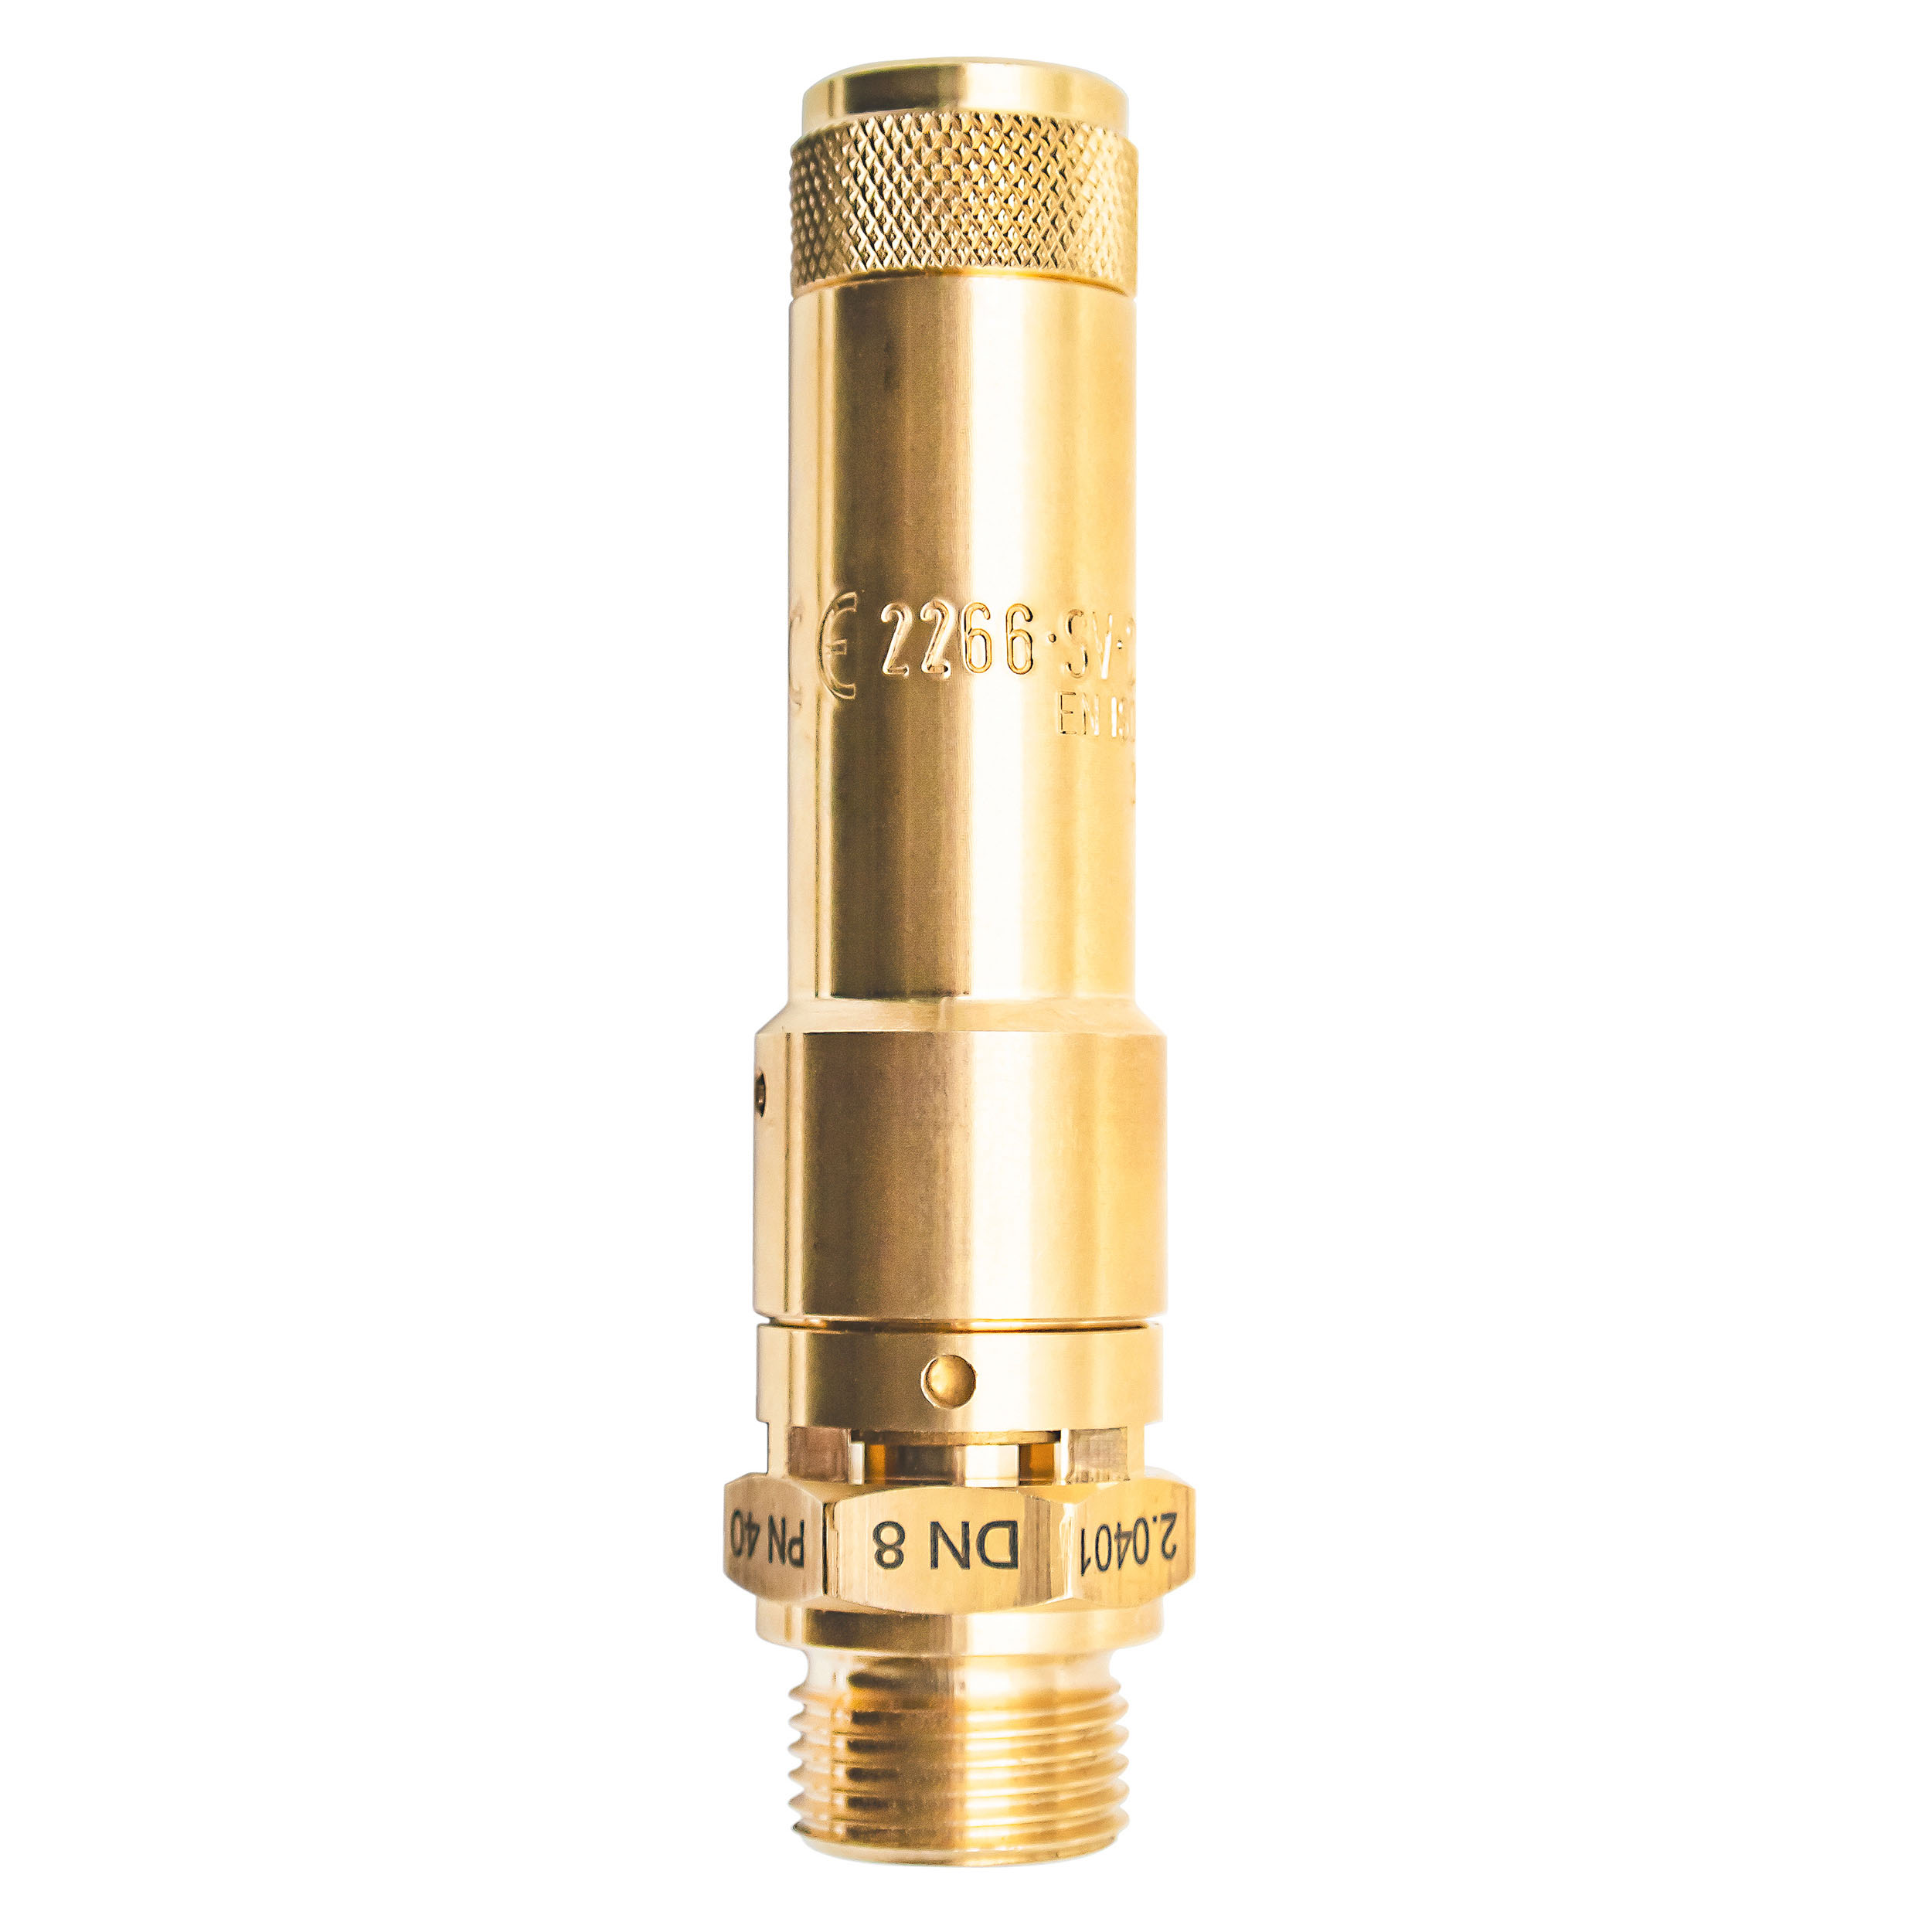 Component-tested safety valve DN 8, G¼, pressure: 2.1-3 bar